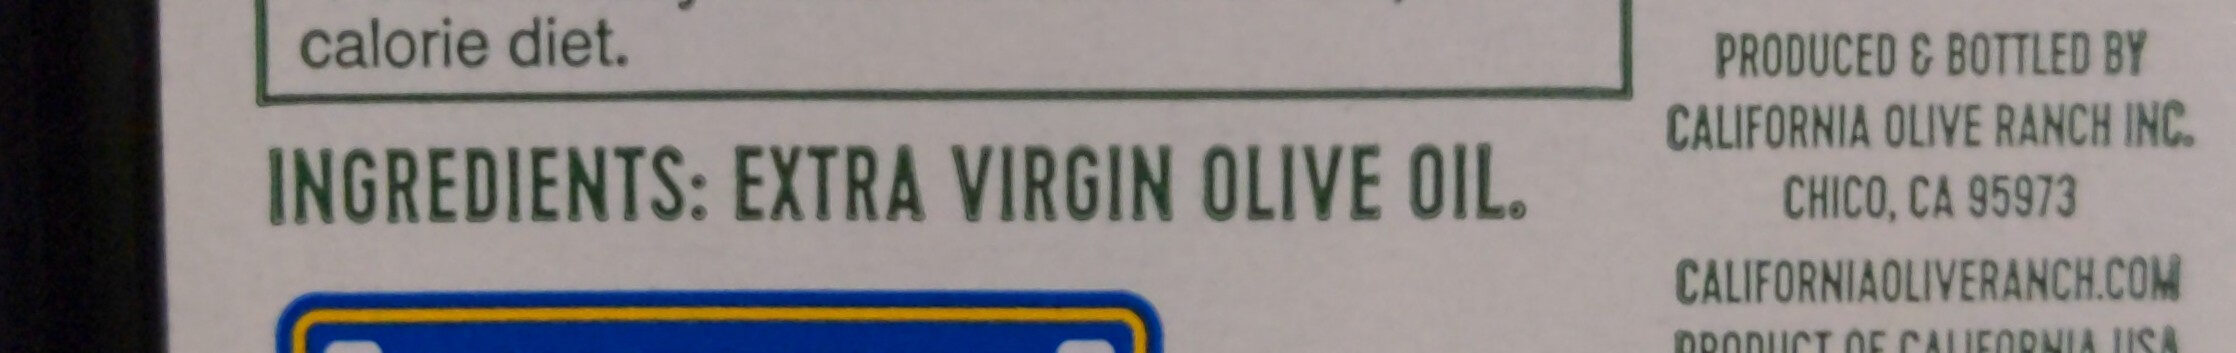 Extra Virgin Olive Oil - Ingredients